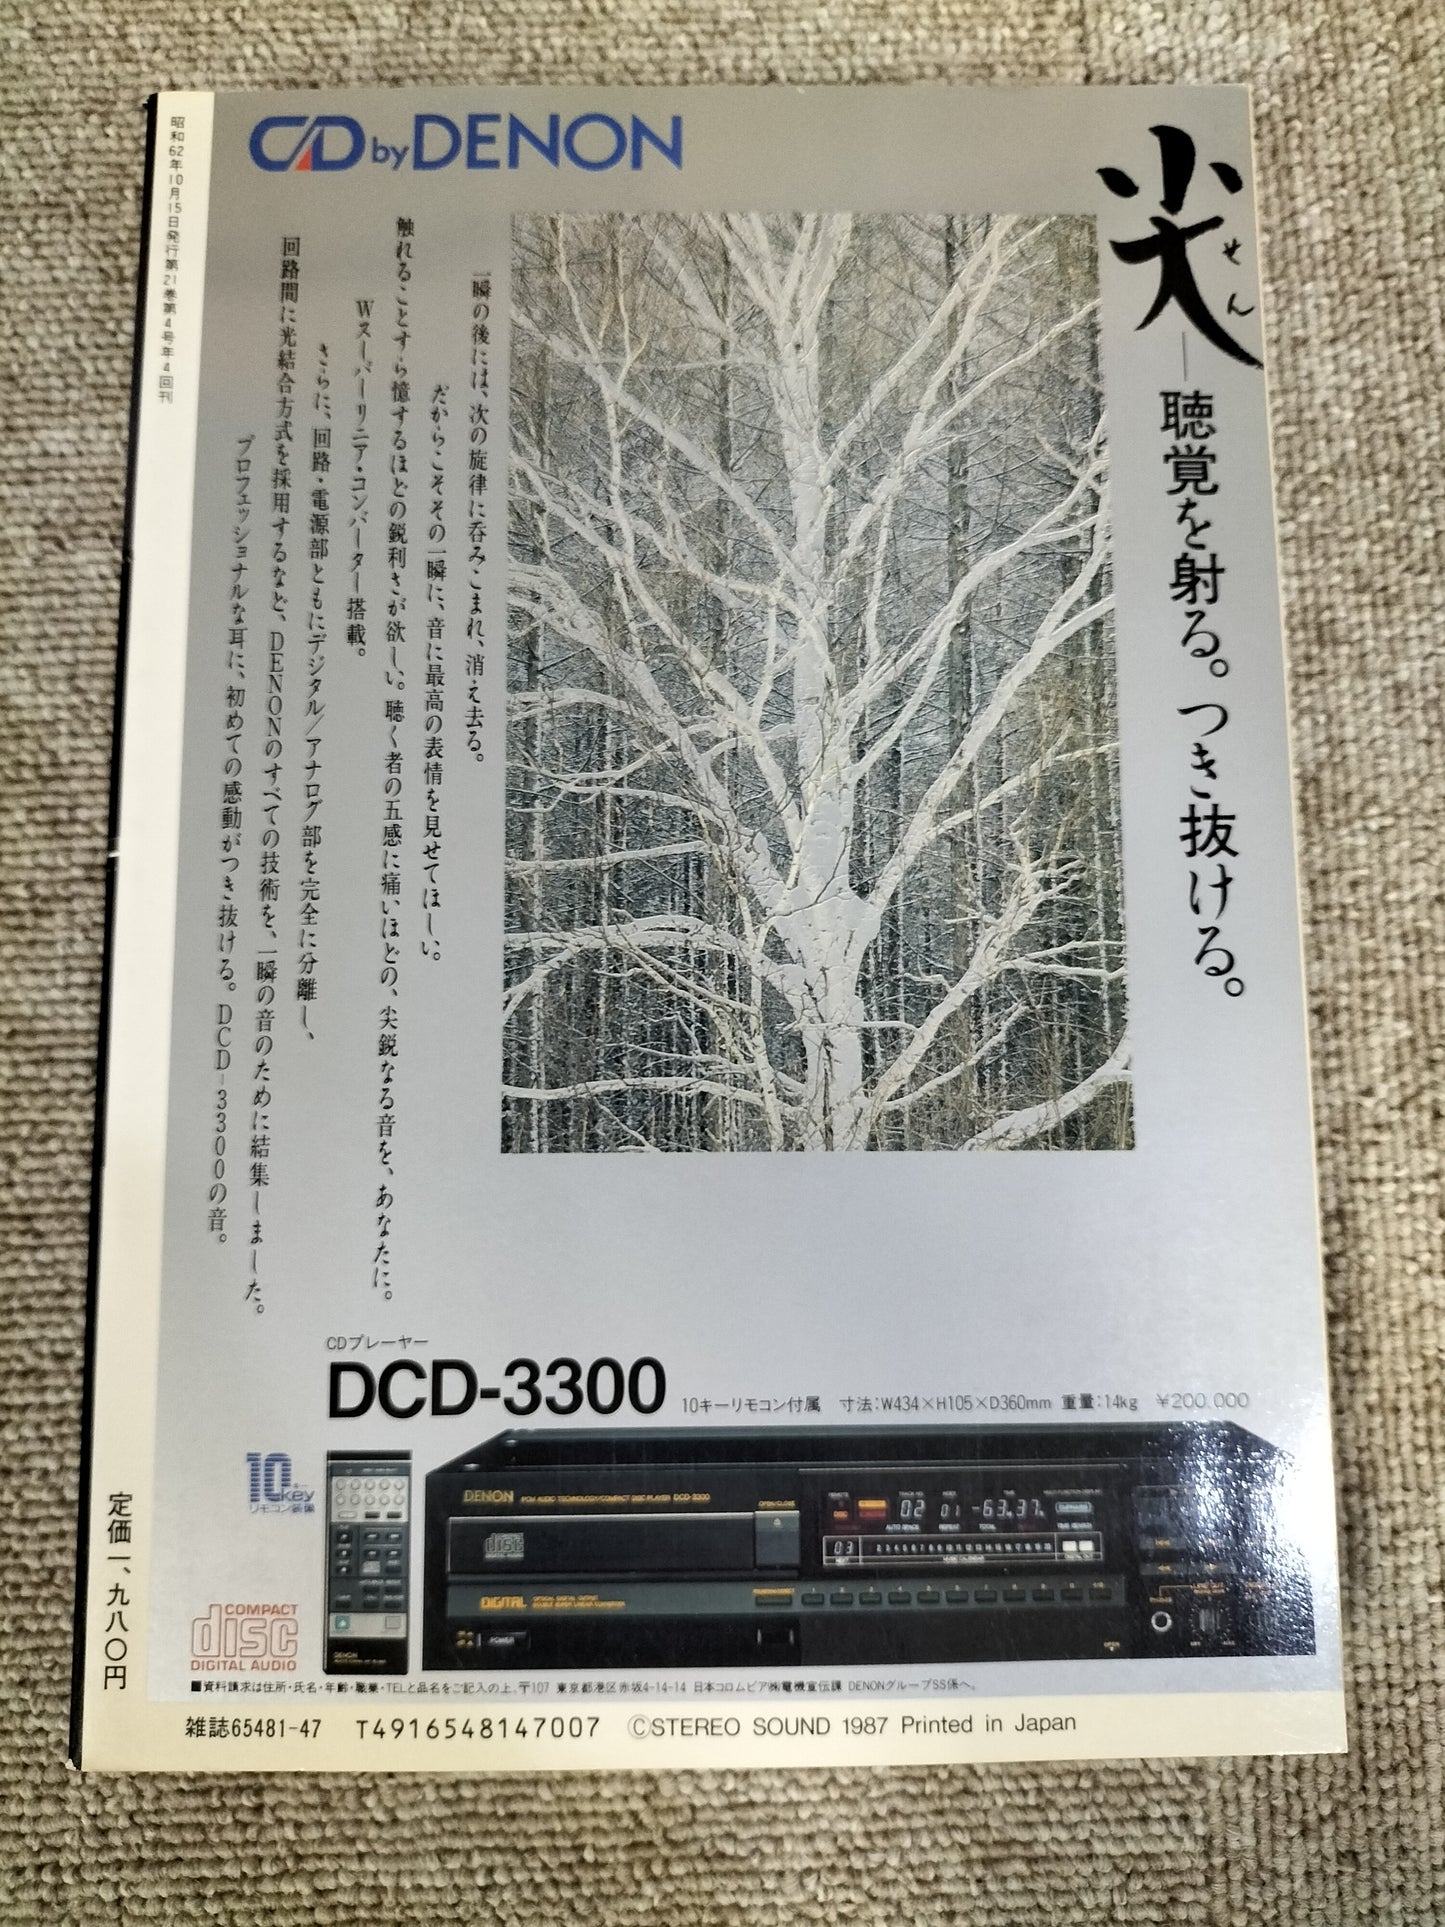 Stereo Sound　季刊ステレオサウンド  No.84 1987年秋号　S22112227